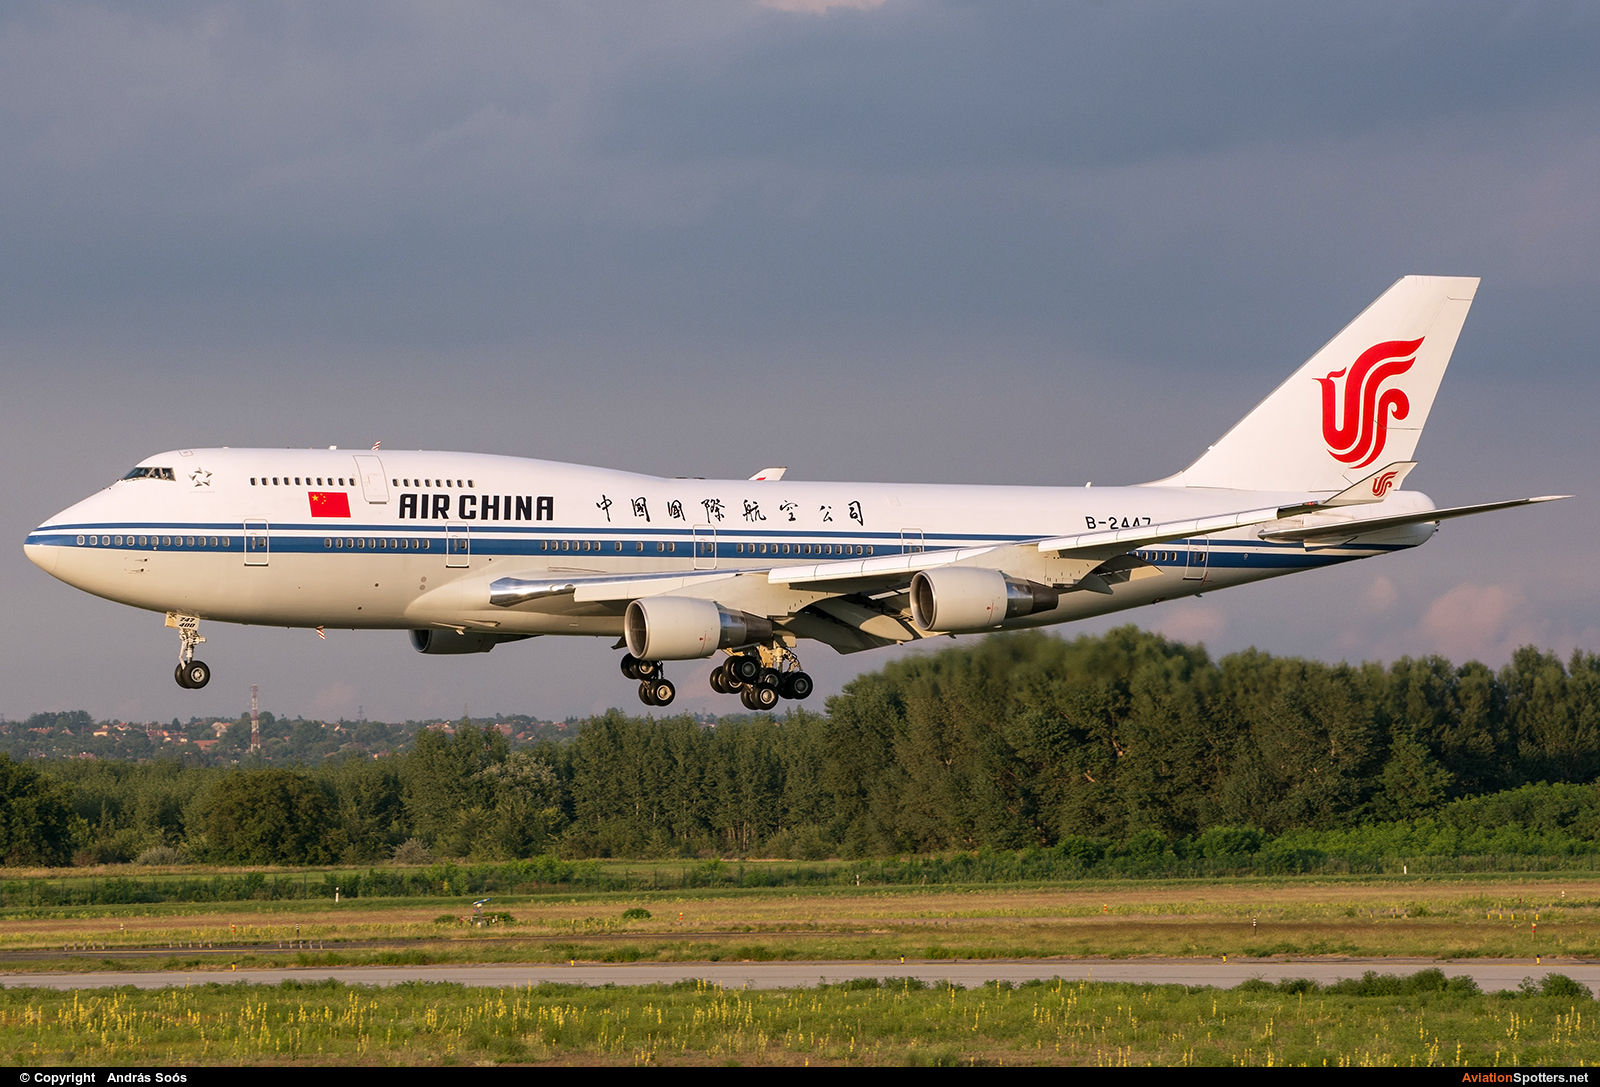 Air China  -  747-400  (B-2447) By András Soós (sas1965)